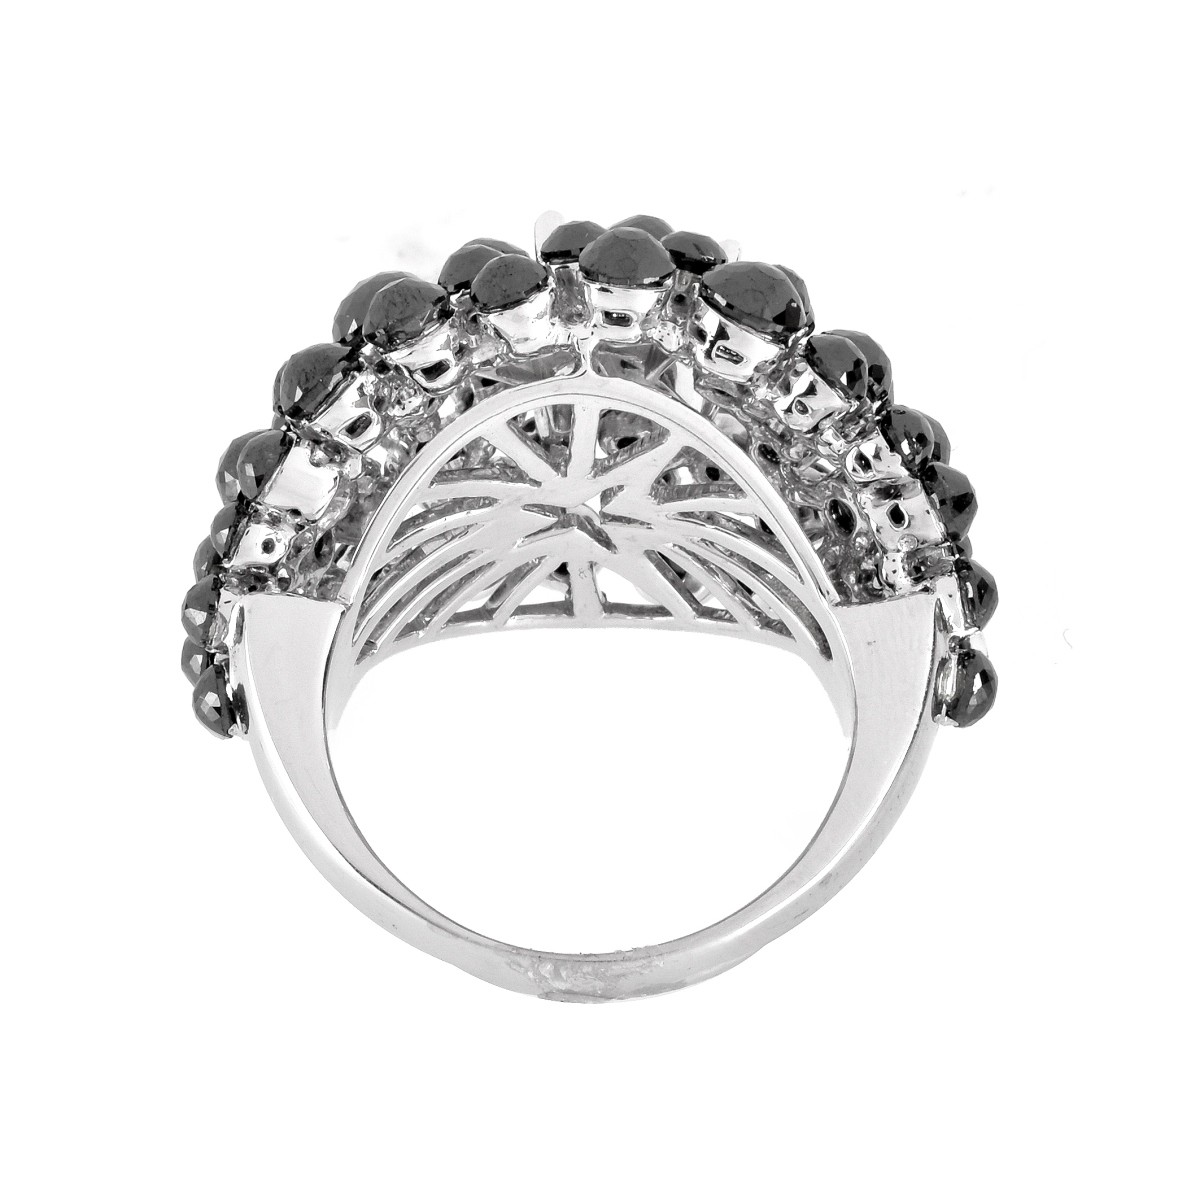 Charade Black and White Diamond Ring